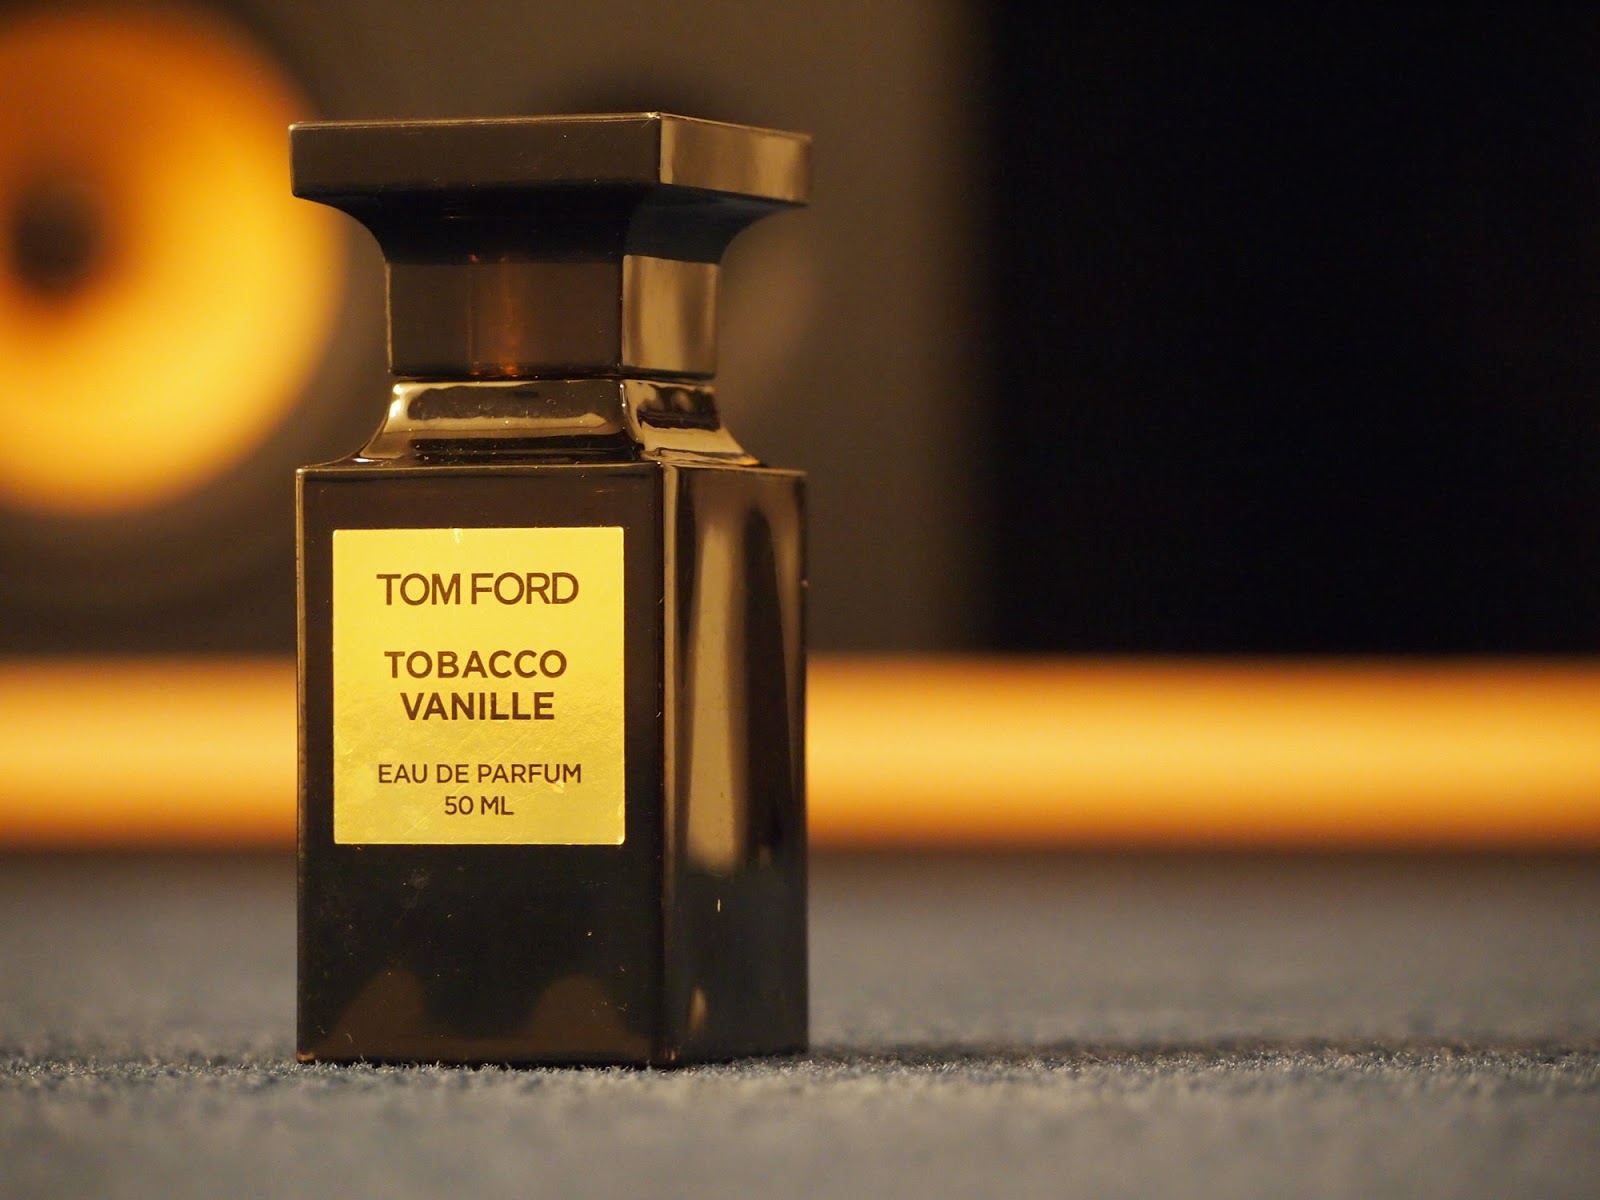 Tom Ford Colognes: Tom Ford Cologne - Tobacco Vanille Eau De Parfum (2007)